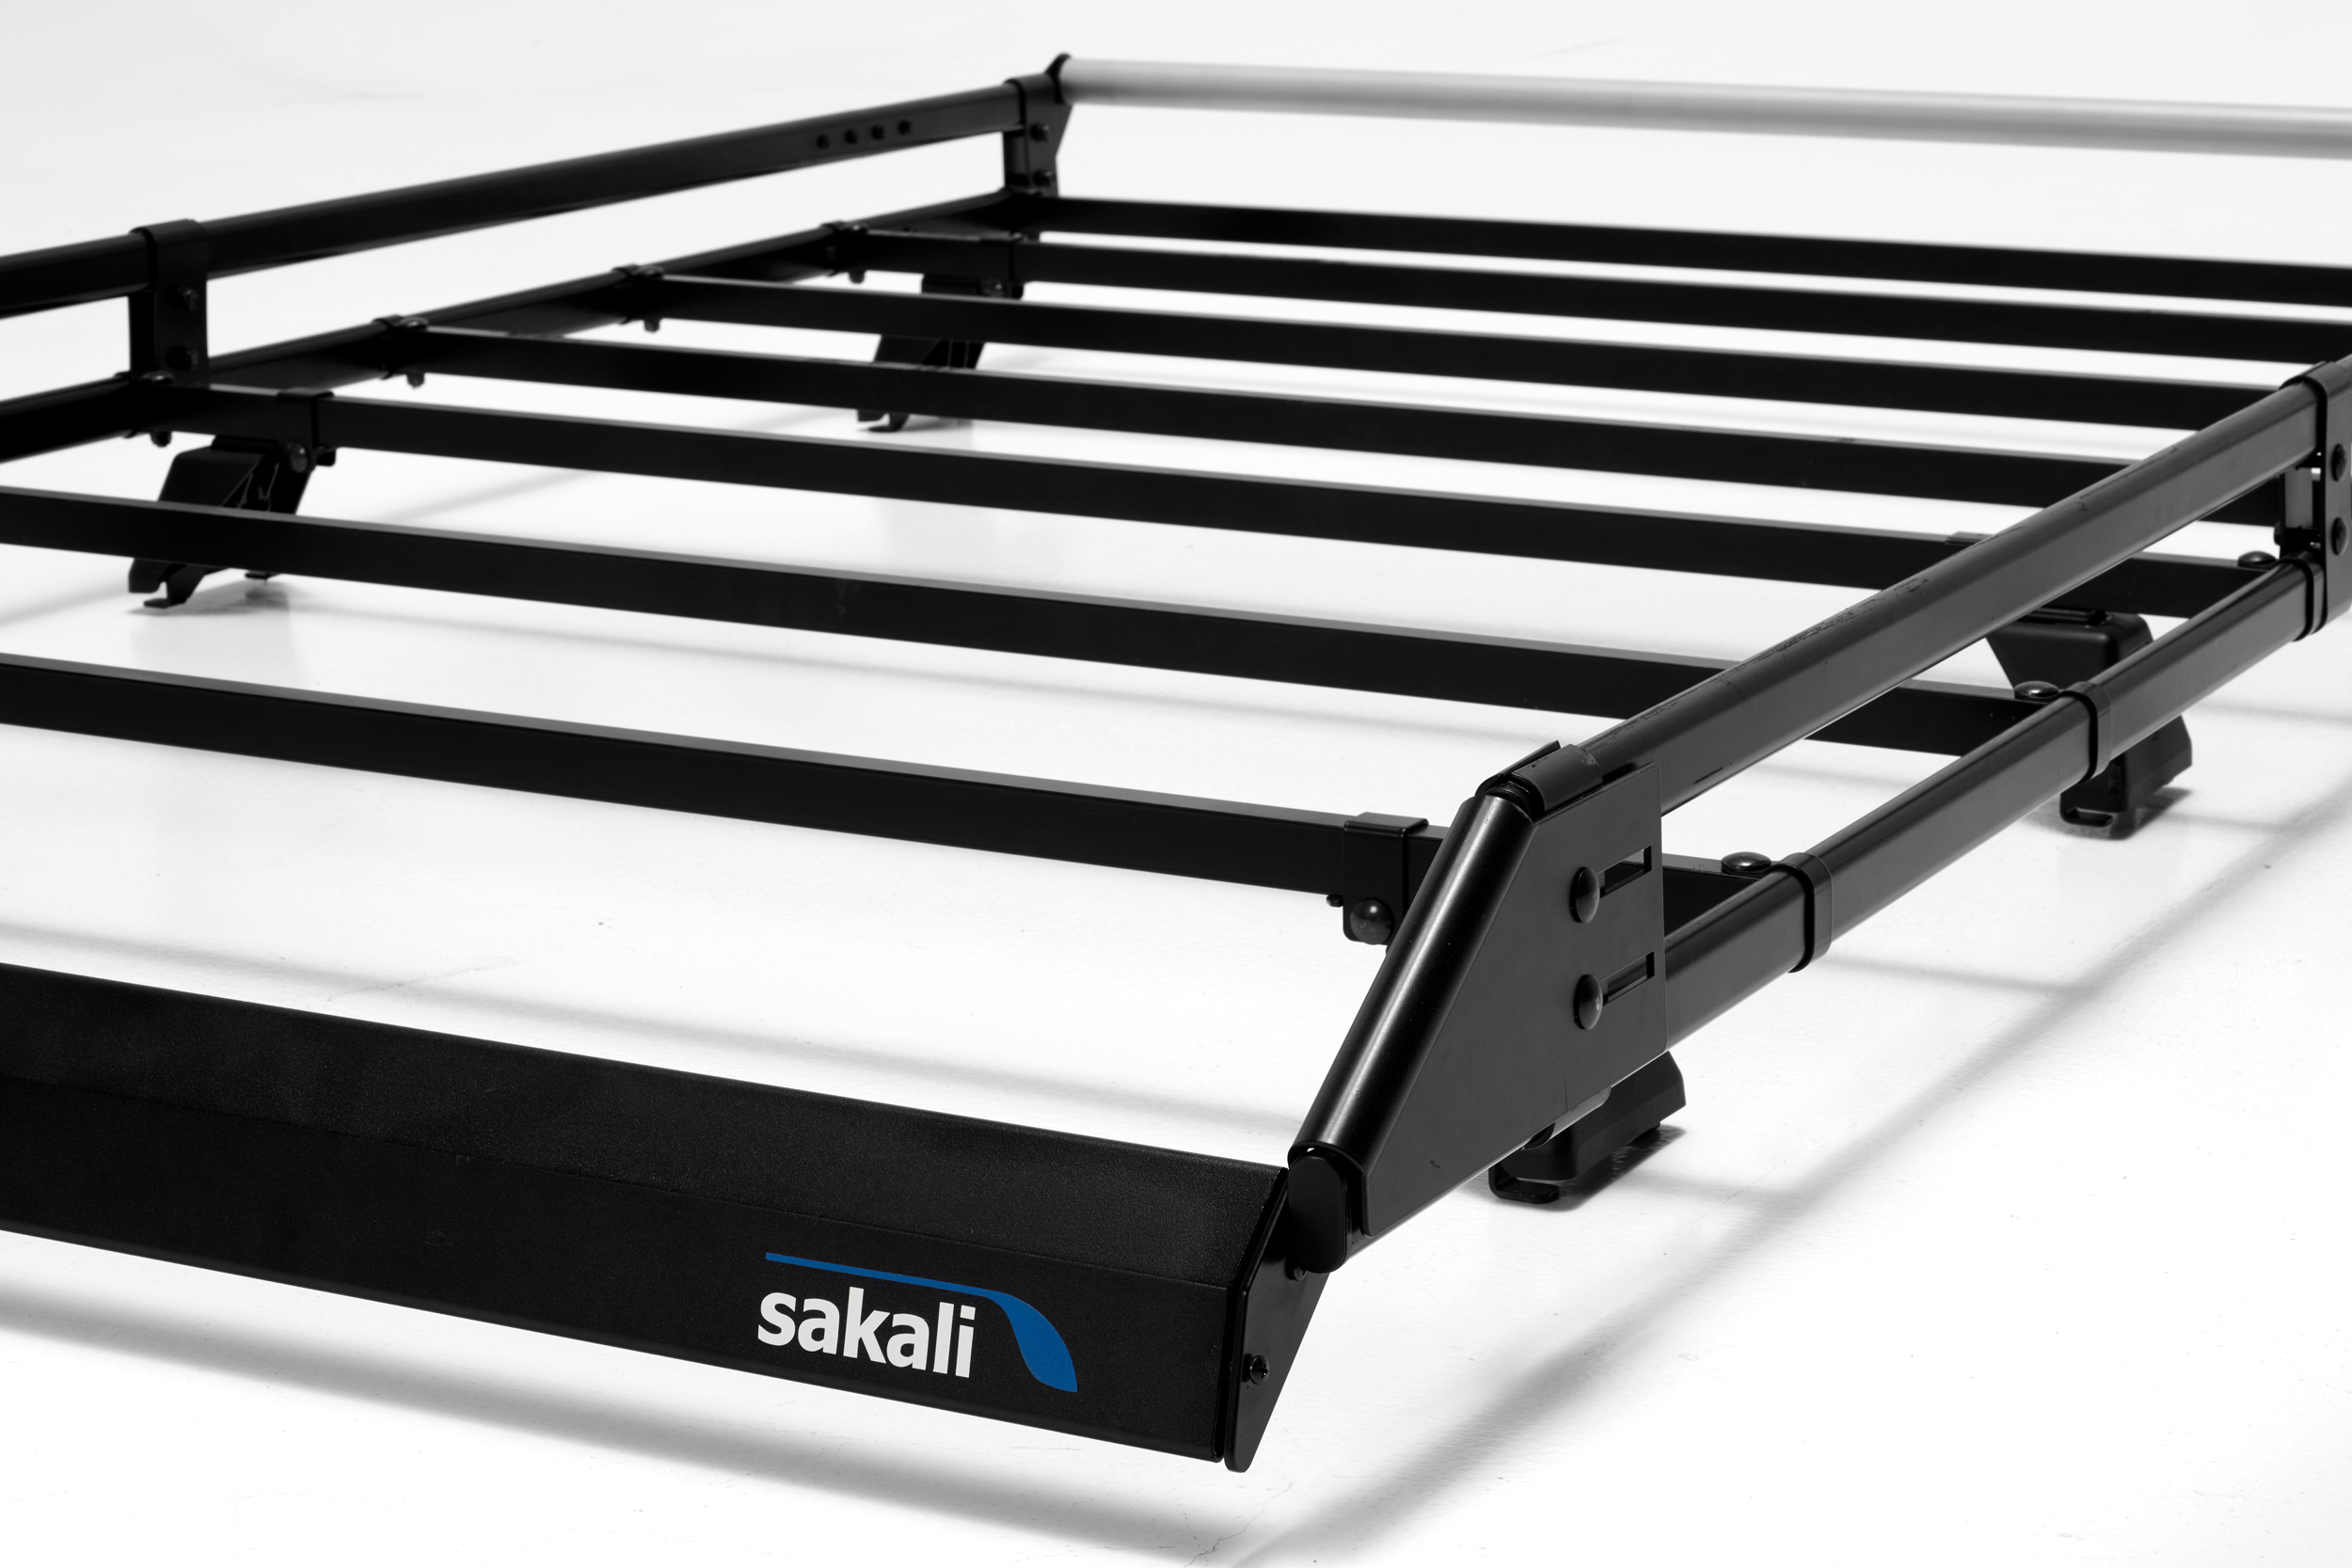 Mendicidad vistazo labio Sakali - Portaequipajes Sakali Rack Steel - Renault Master - Productos